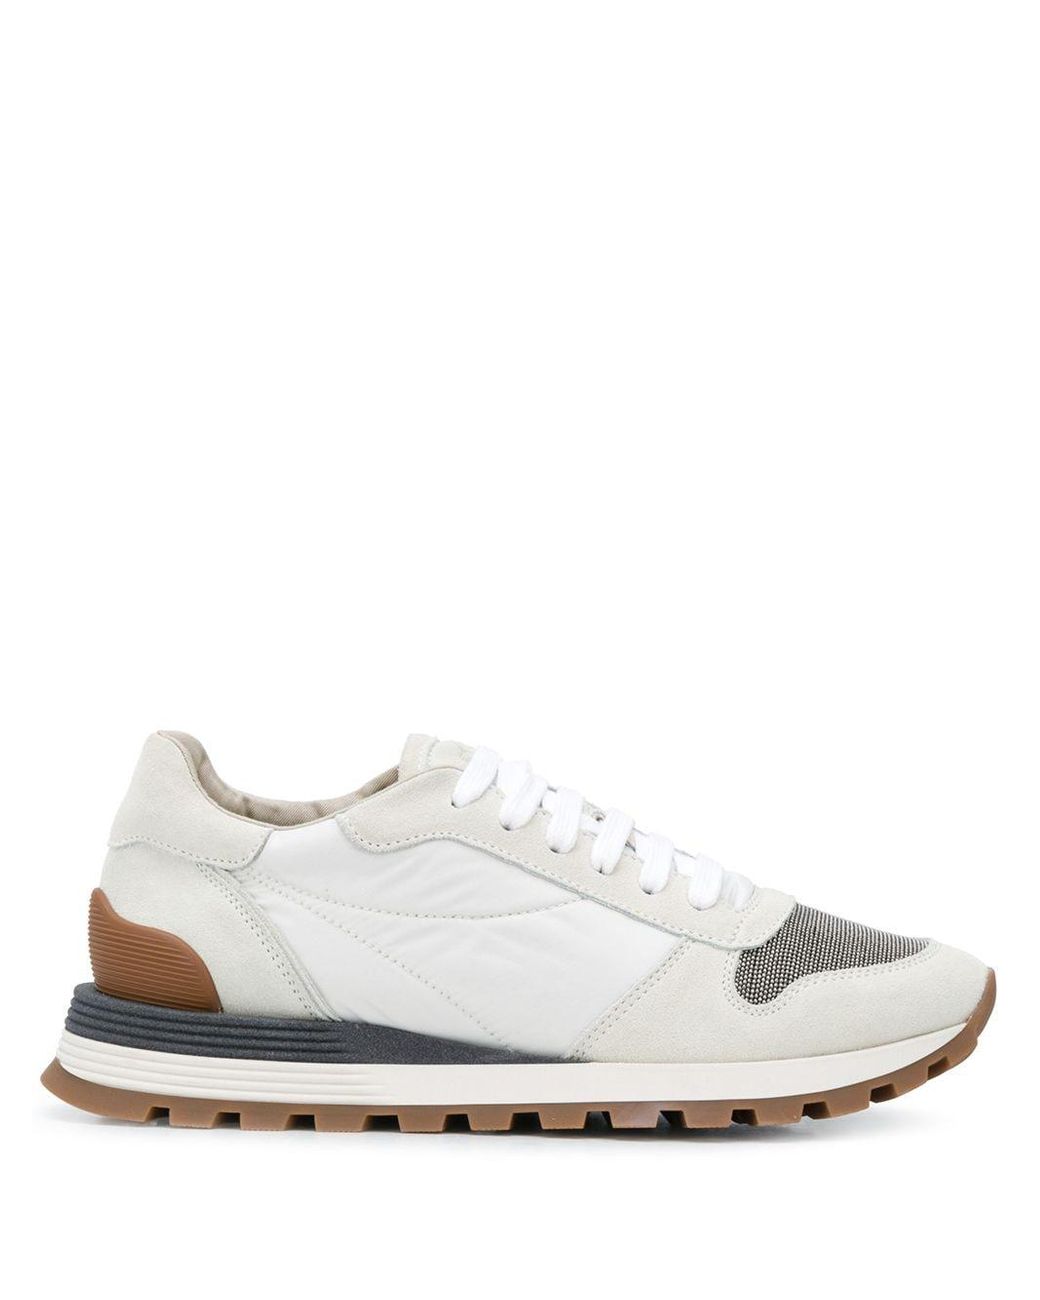 Brunello Cucinelli Leather Colour-block Sneakers in White - Lyst